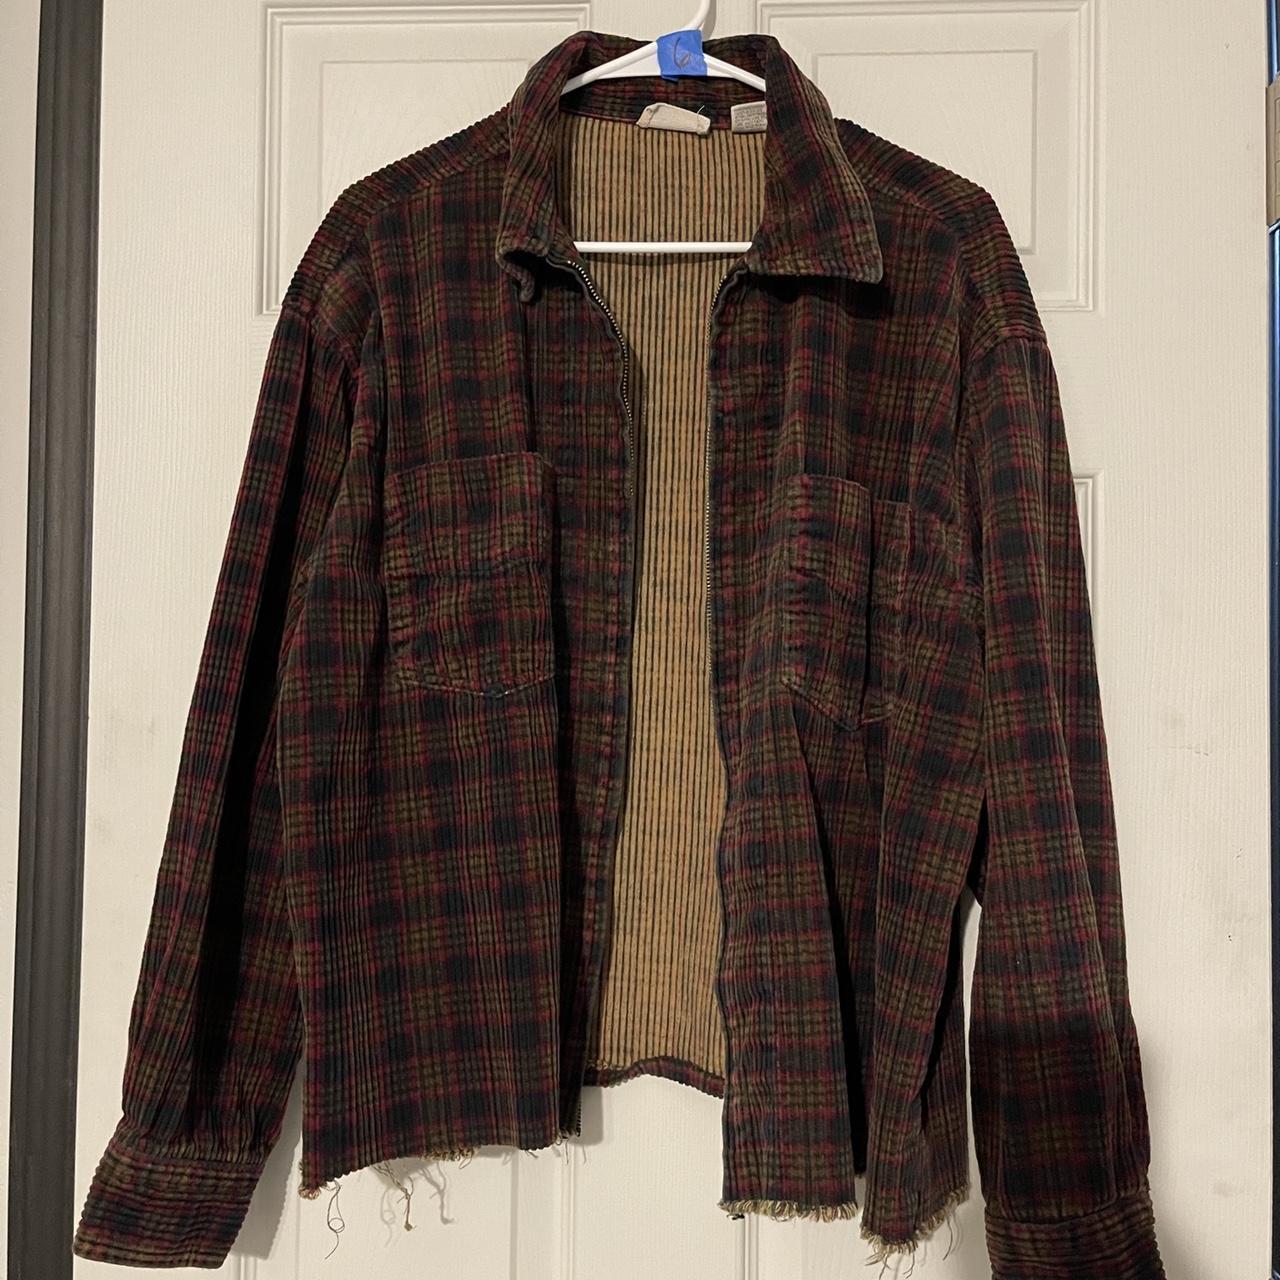 Thrifted corduroy brown/maroon cut off jacket. Had a... - Depop